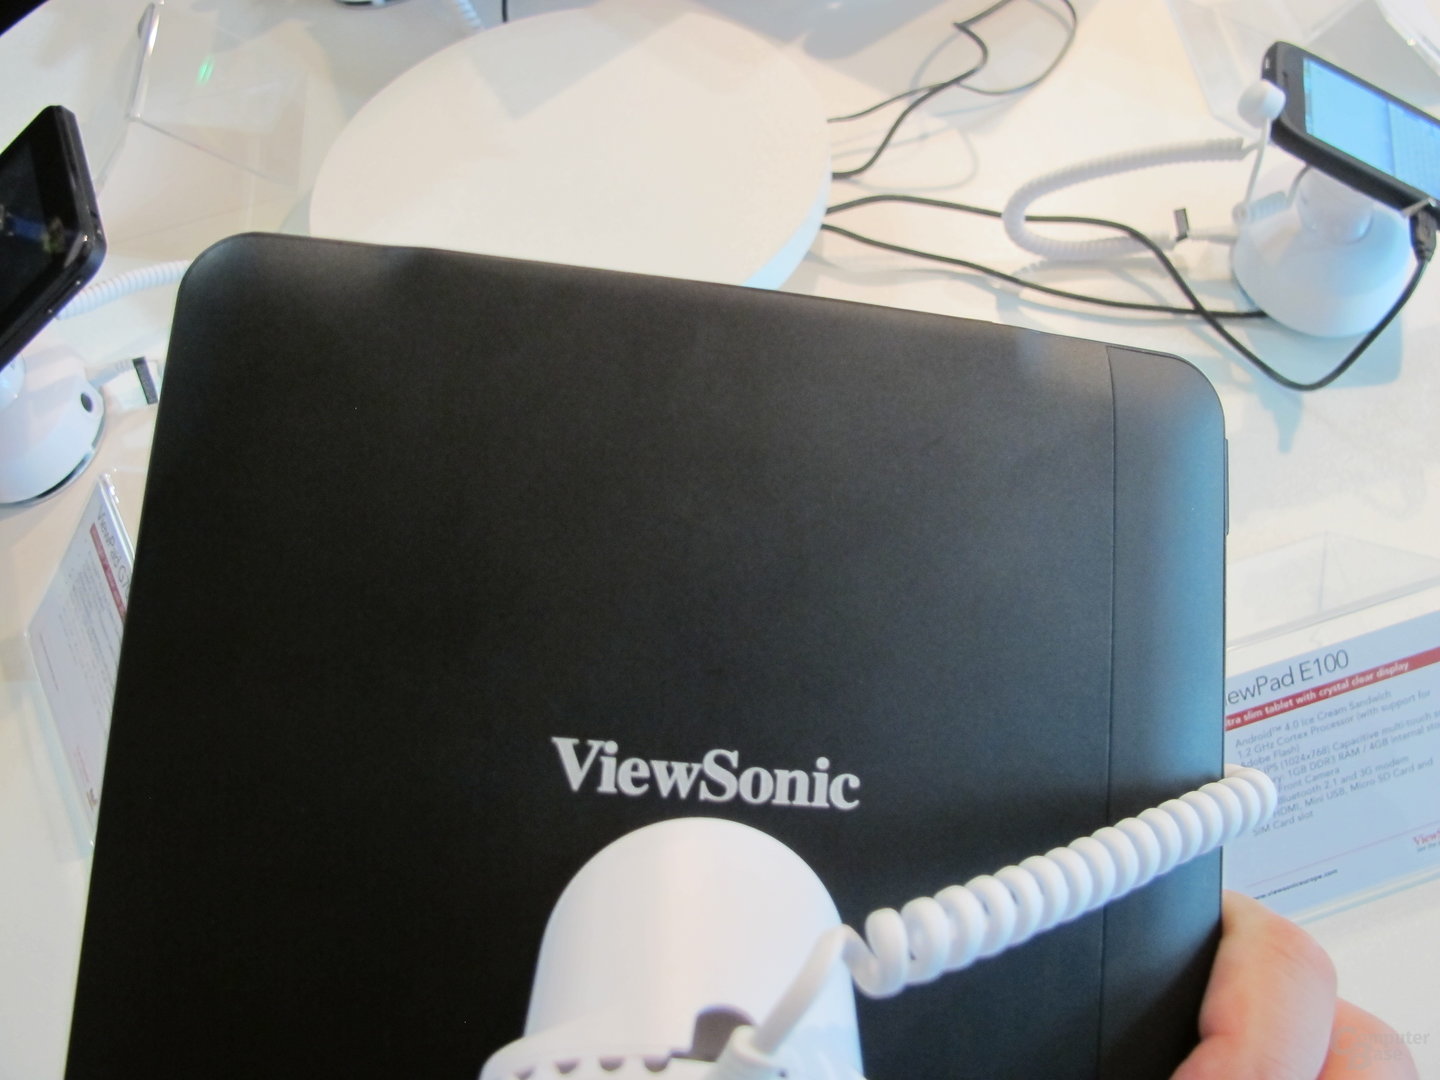 ViewSonic ViewPad E100